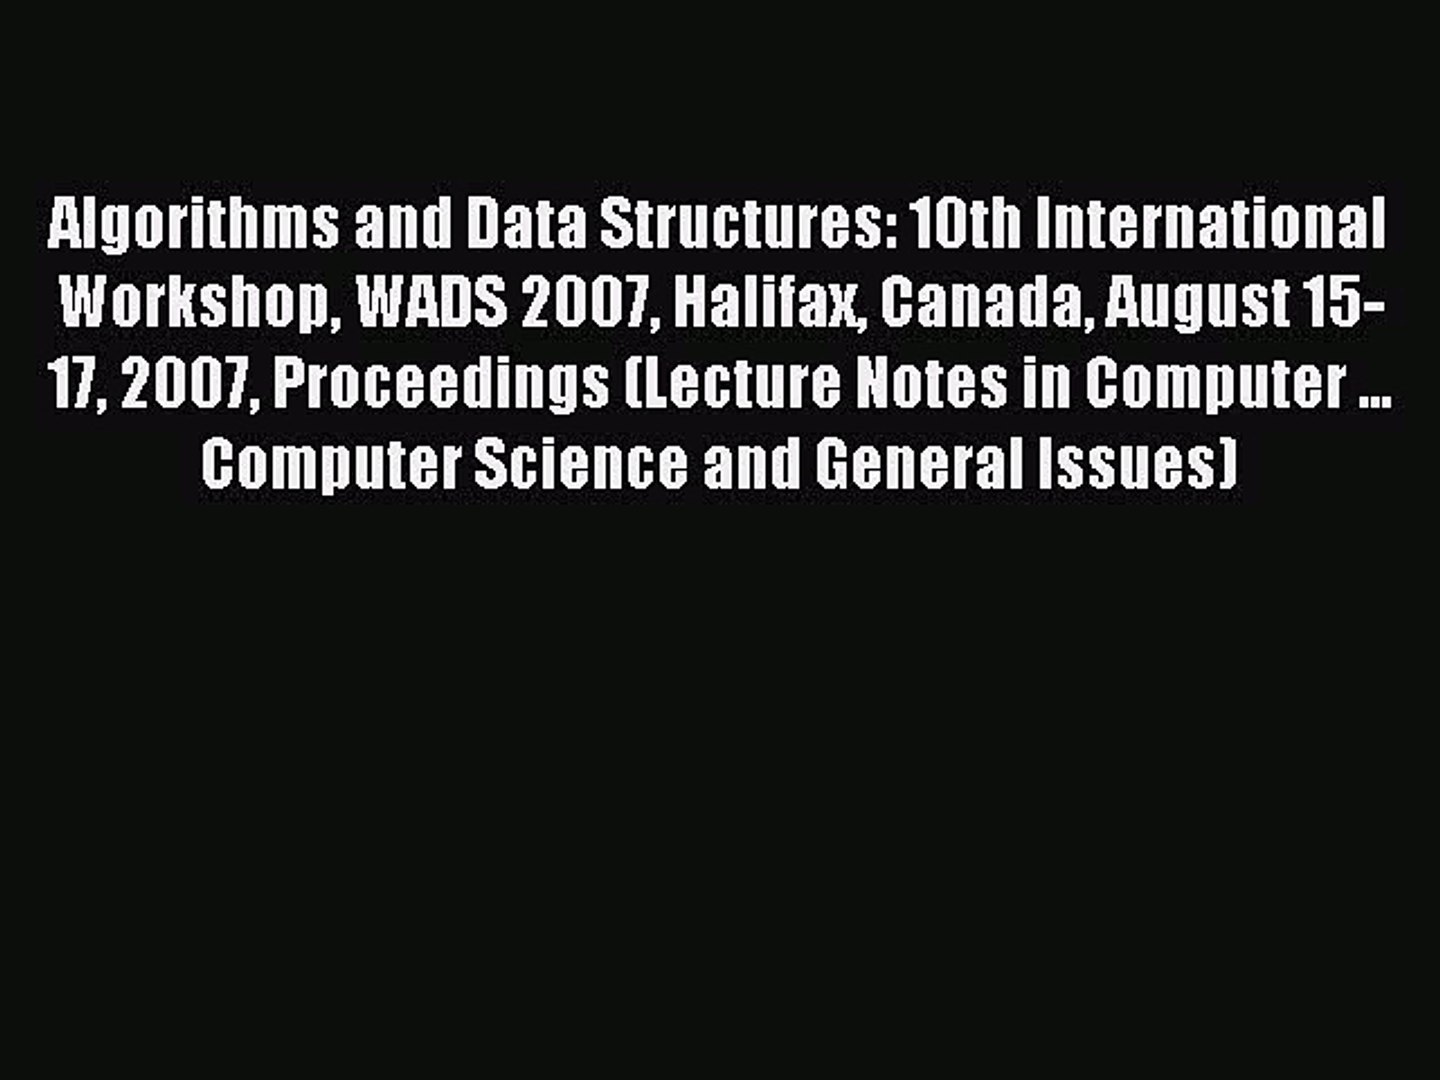 Download Algorithms and Data Structures: 10th International Workshop WADS 2007 Halifax Canada